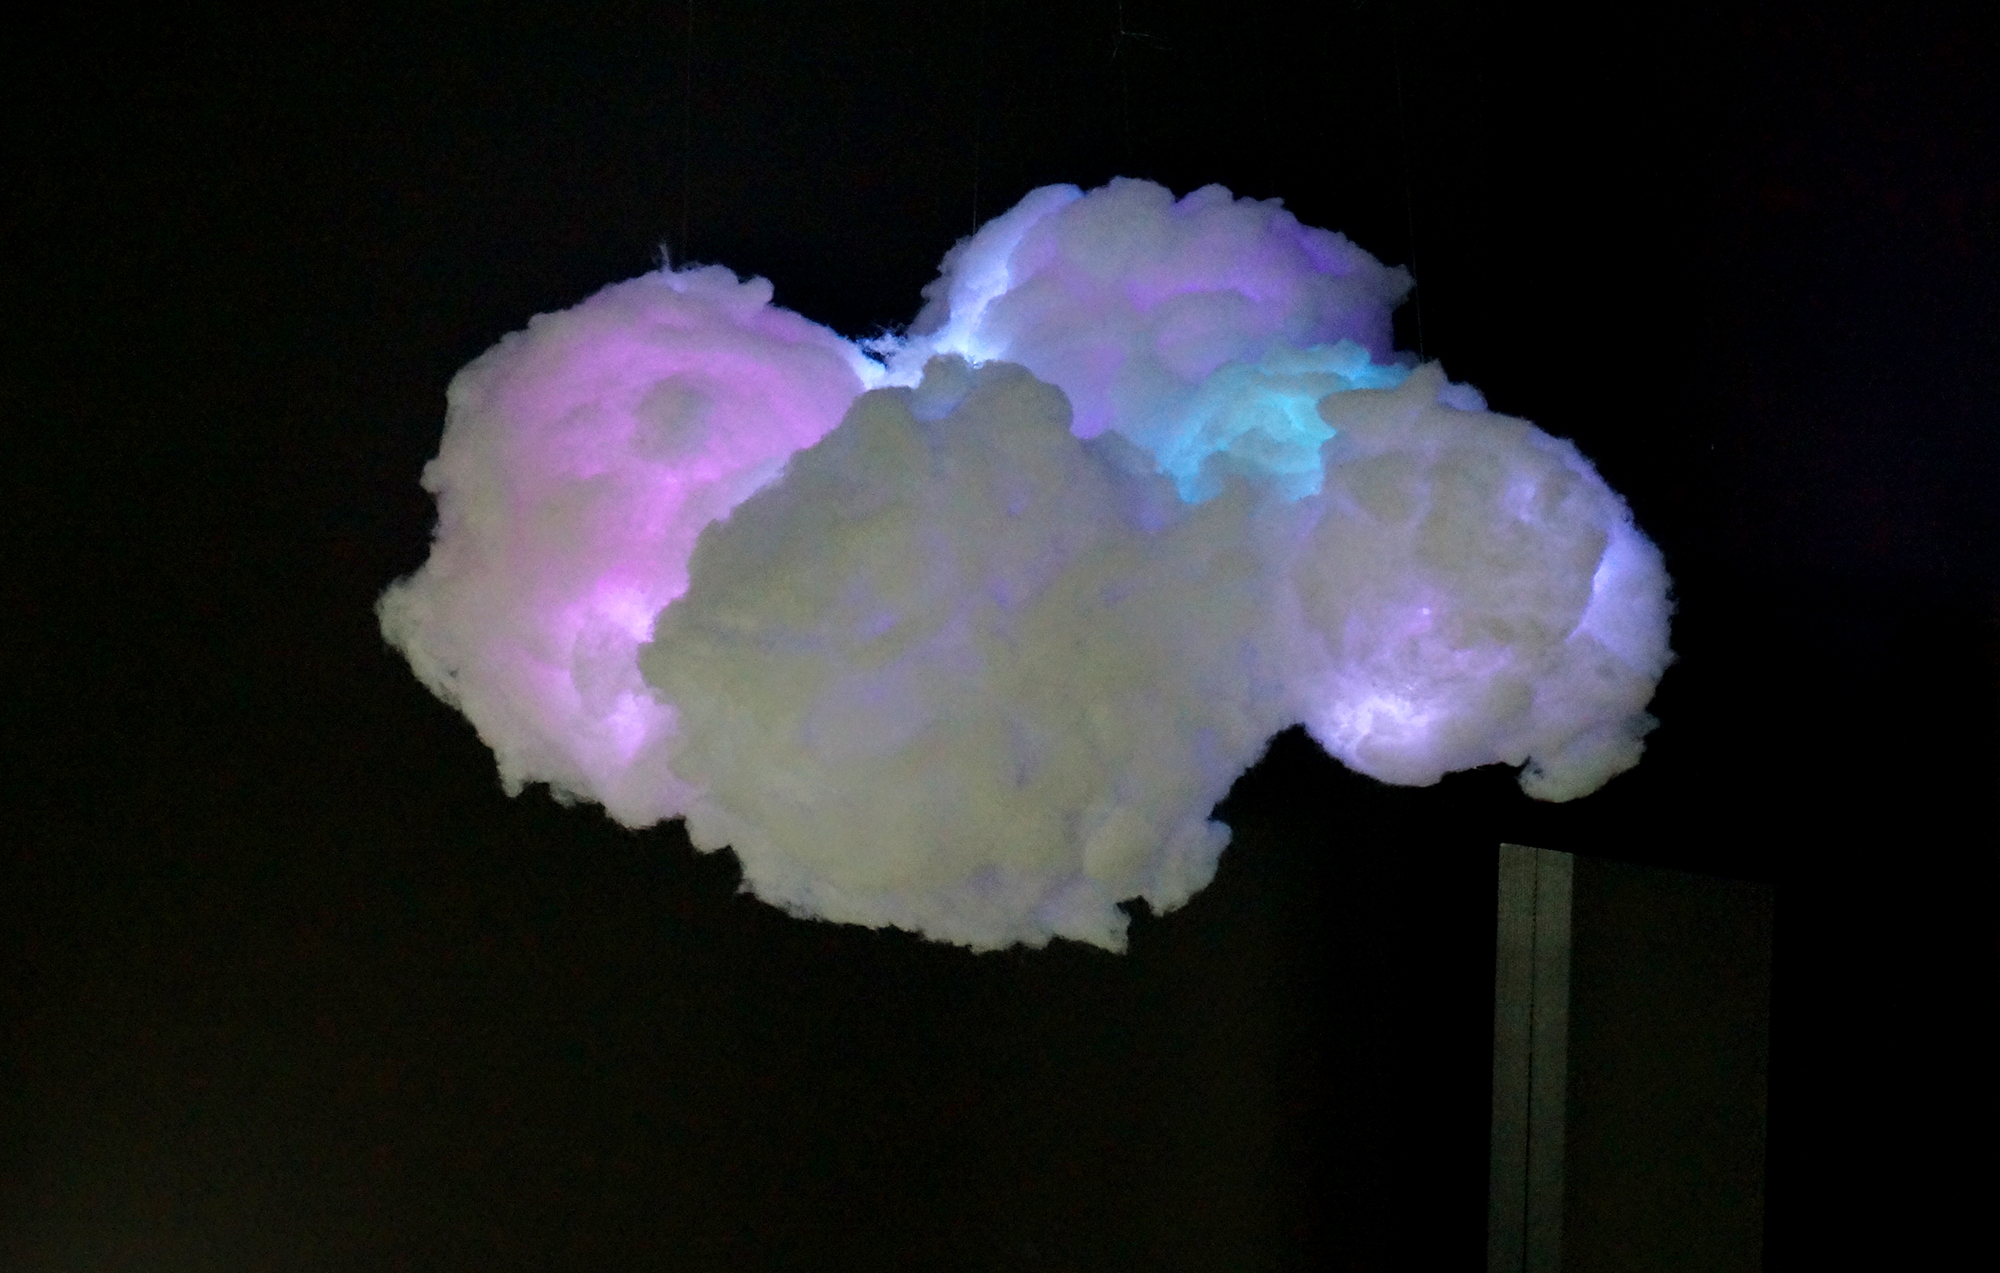 Super-fast DIY LED cloud lamp - CNET